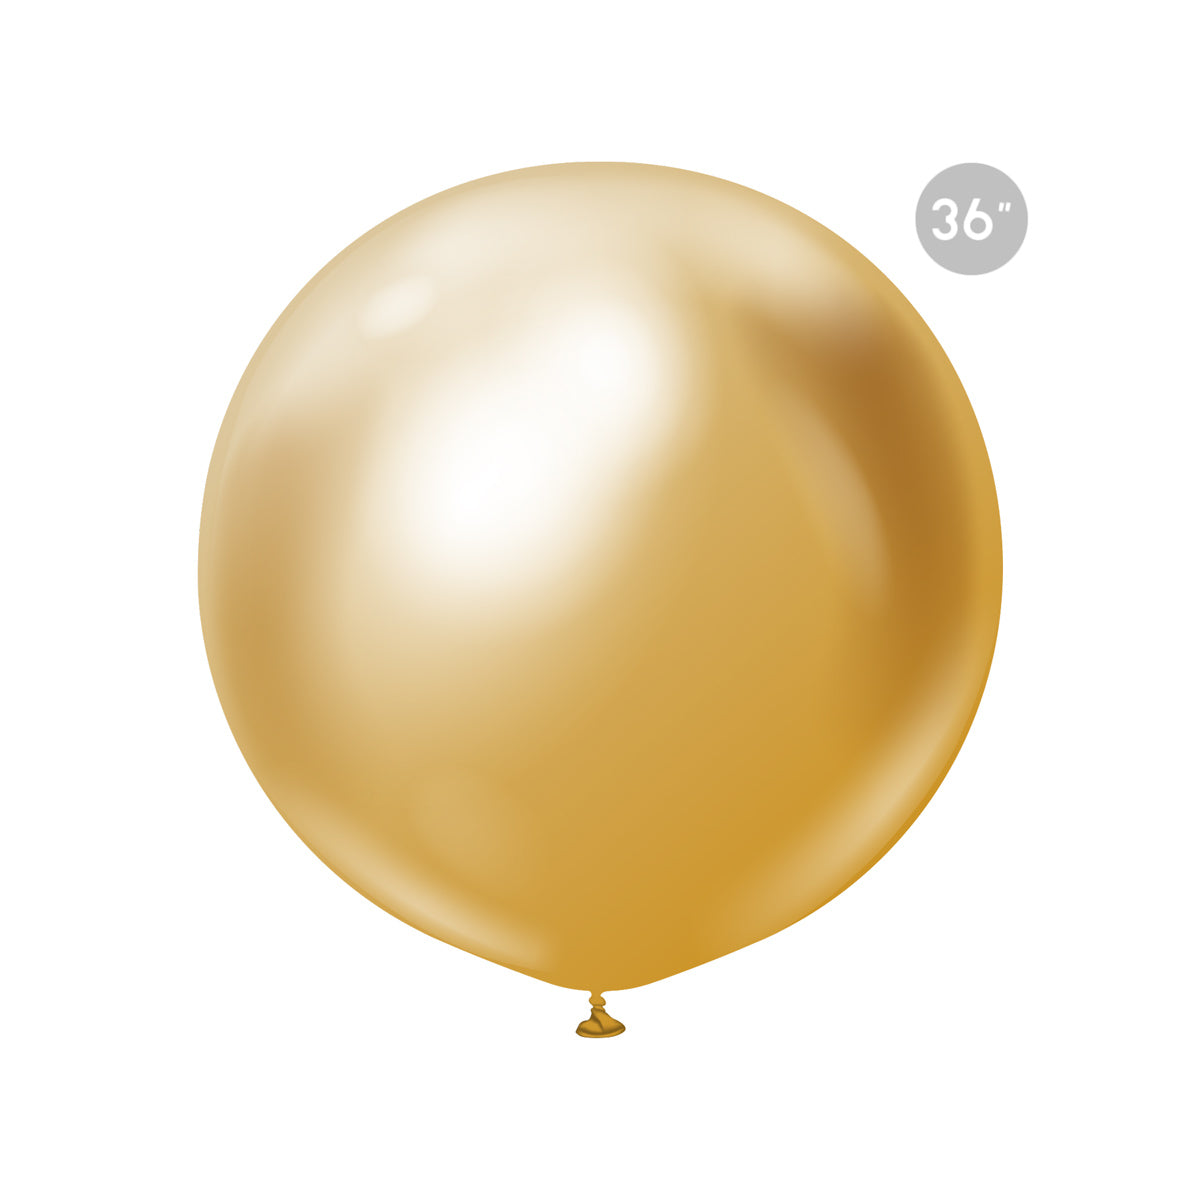 Jumbo Chrome Gold Latex Balloon 36" - Gold Christmas Party Decor - New Year Eve Party Decoration - Metallic Mirror Gold Birthday Balloon